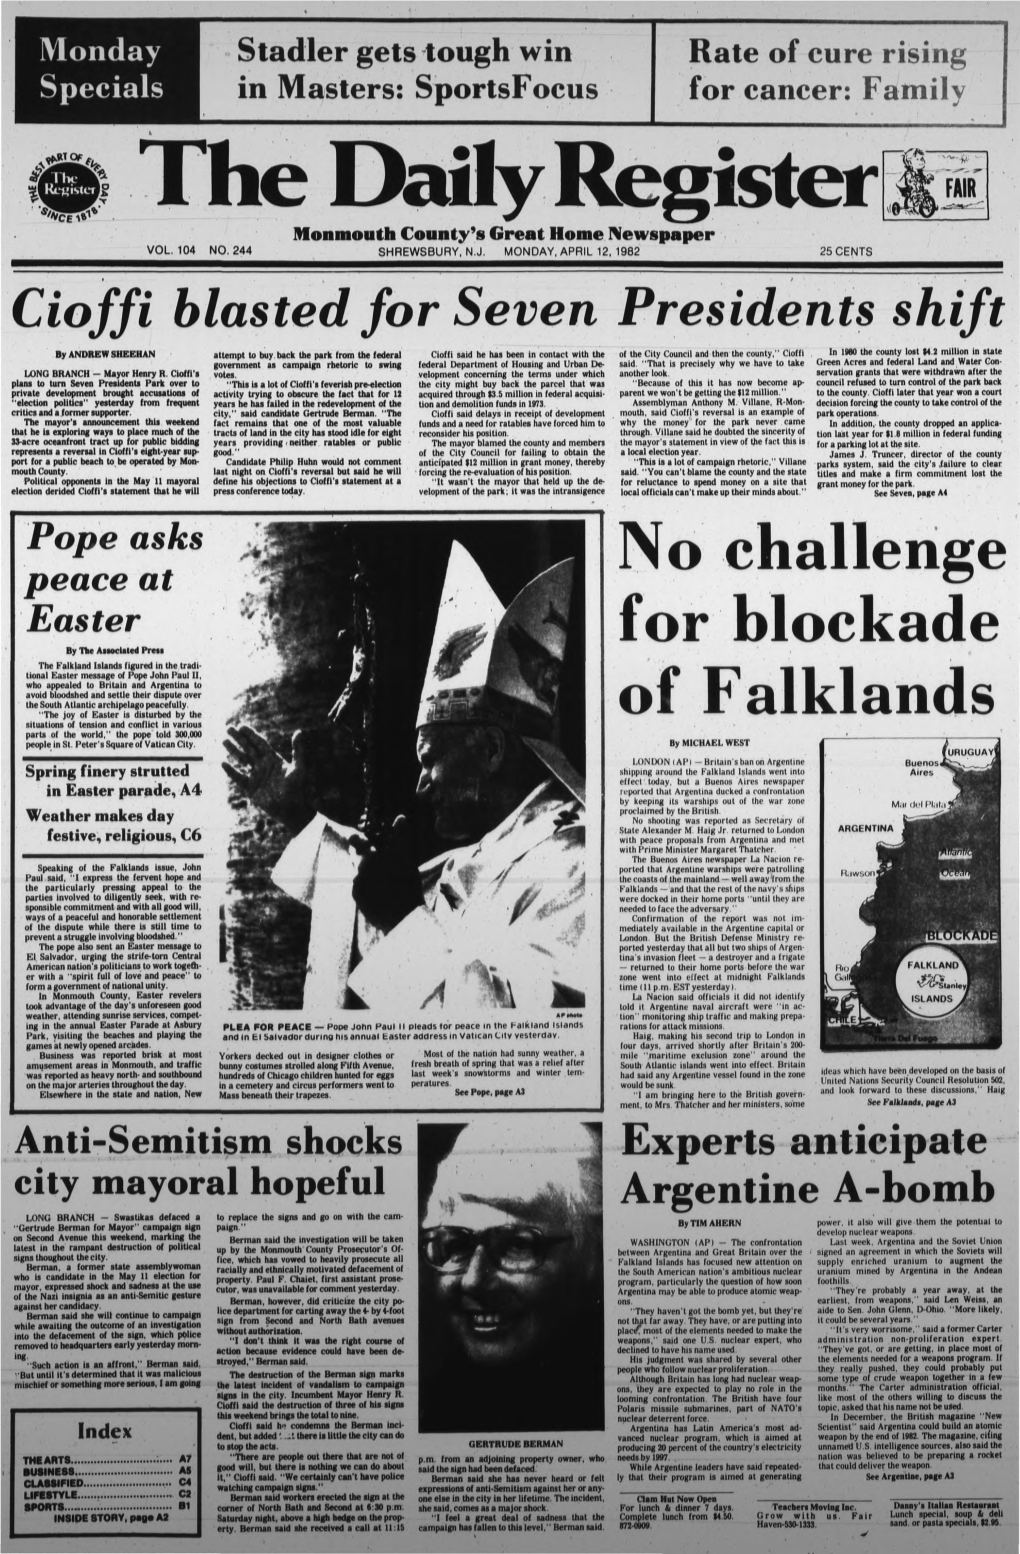 No Challenge for Blockade of Falklands